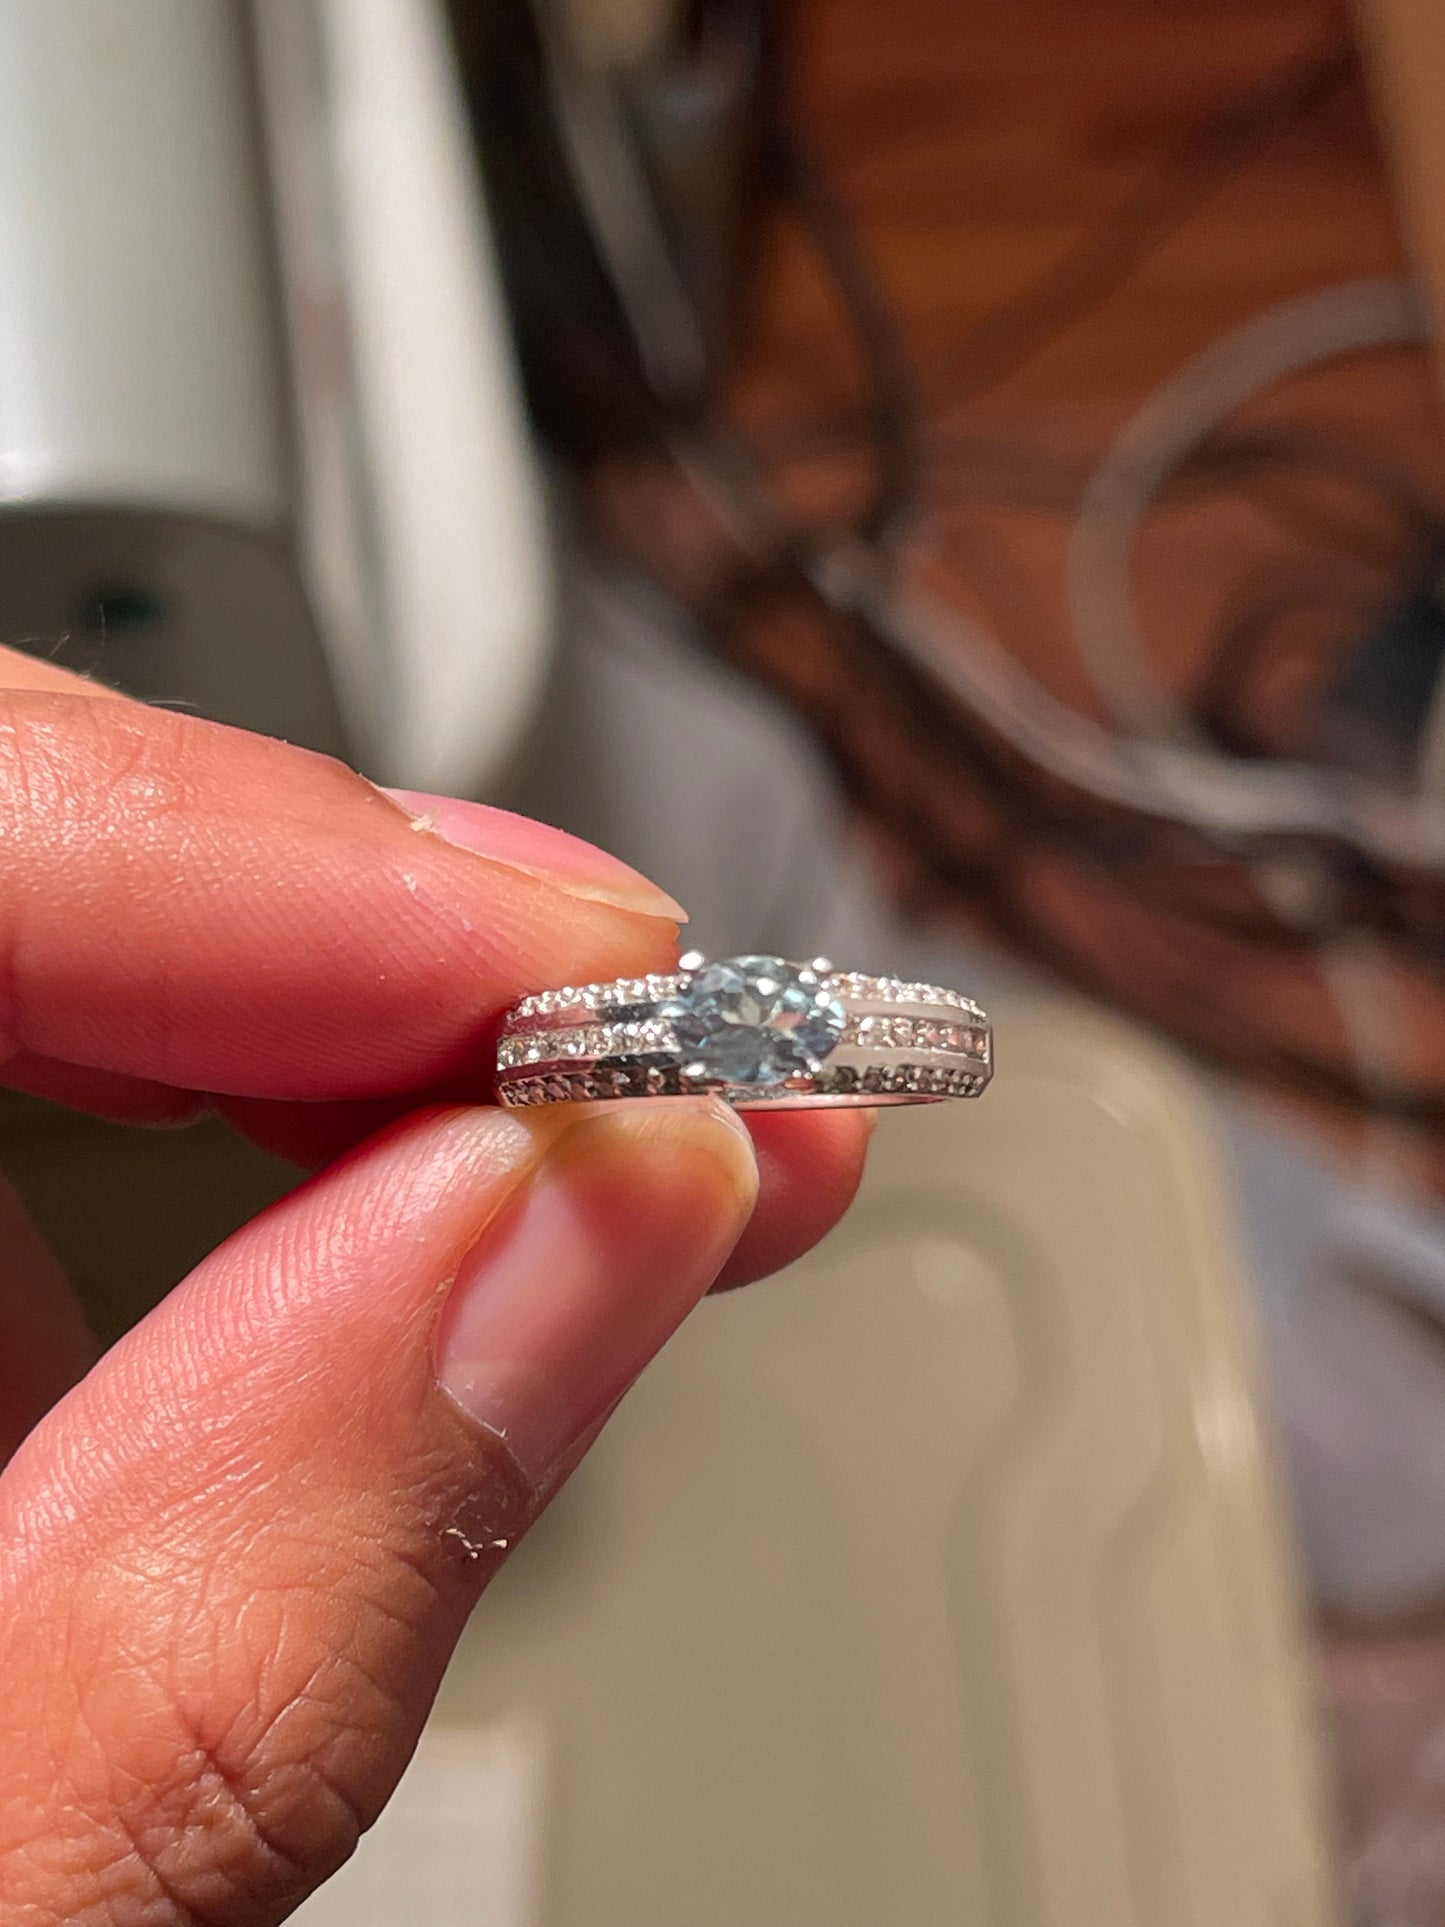 1.57 Carat Natural Color Change Alexandrite & Diamond 14k White Gold Ring (Size 7)